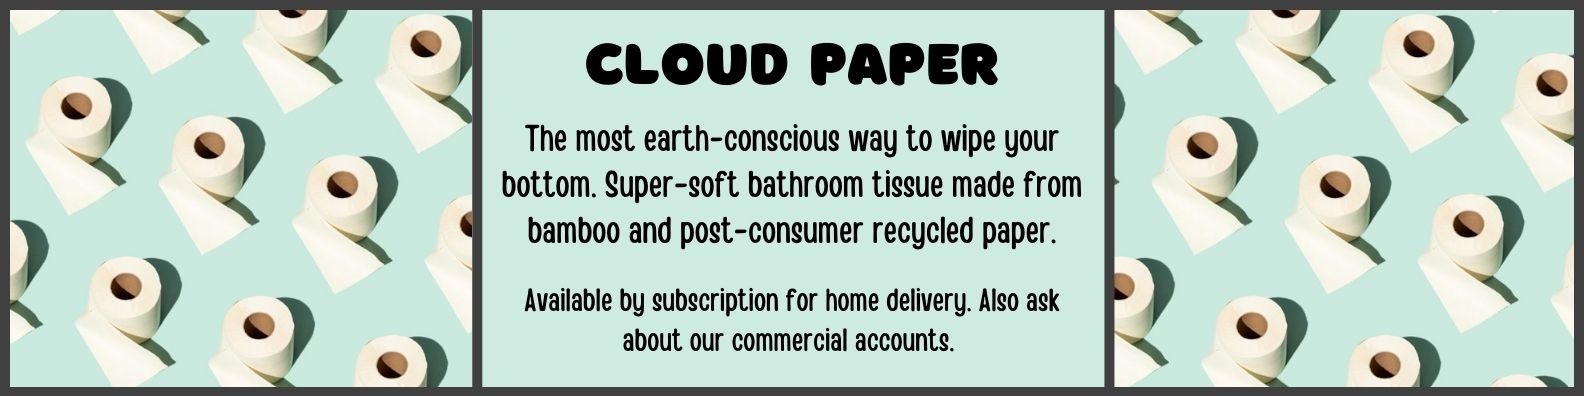 Cloud Paper banner